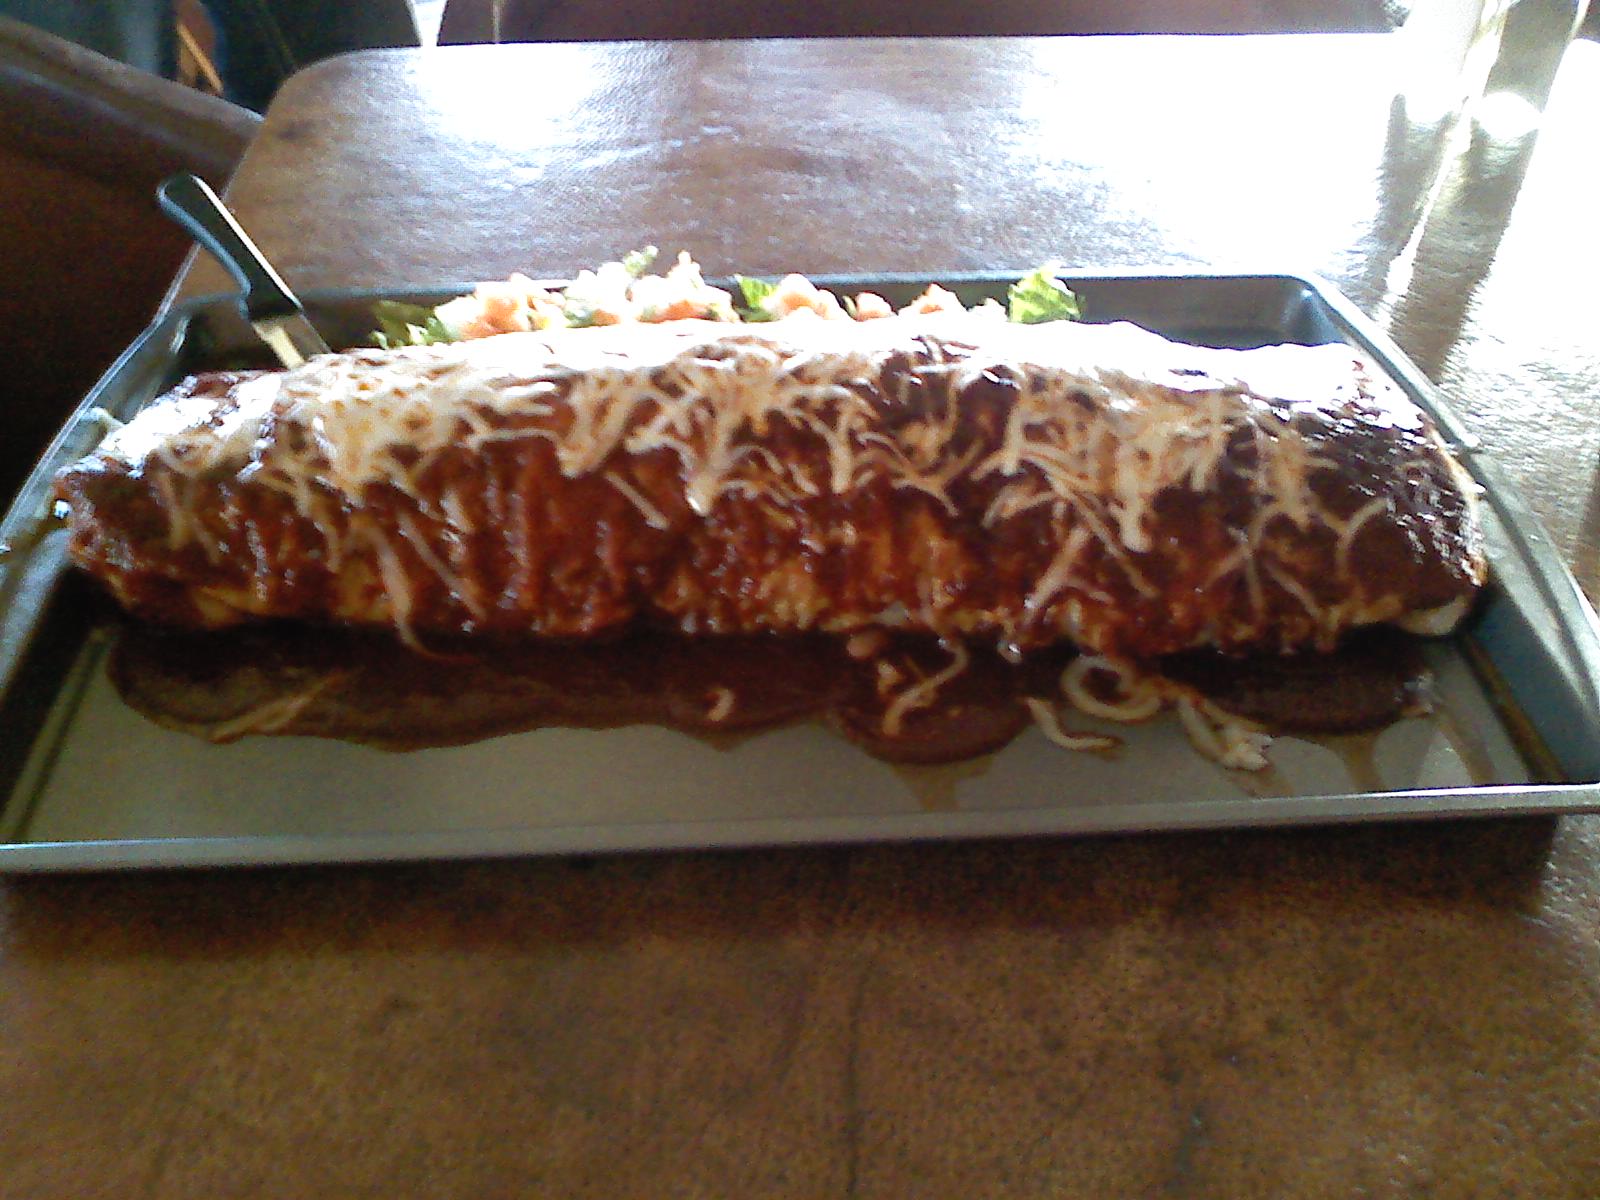 La Botana's 5 lb. burrito (Credit: www.freak8r.com)